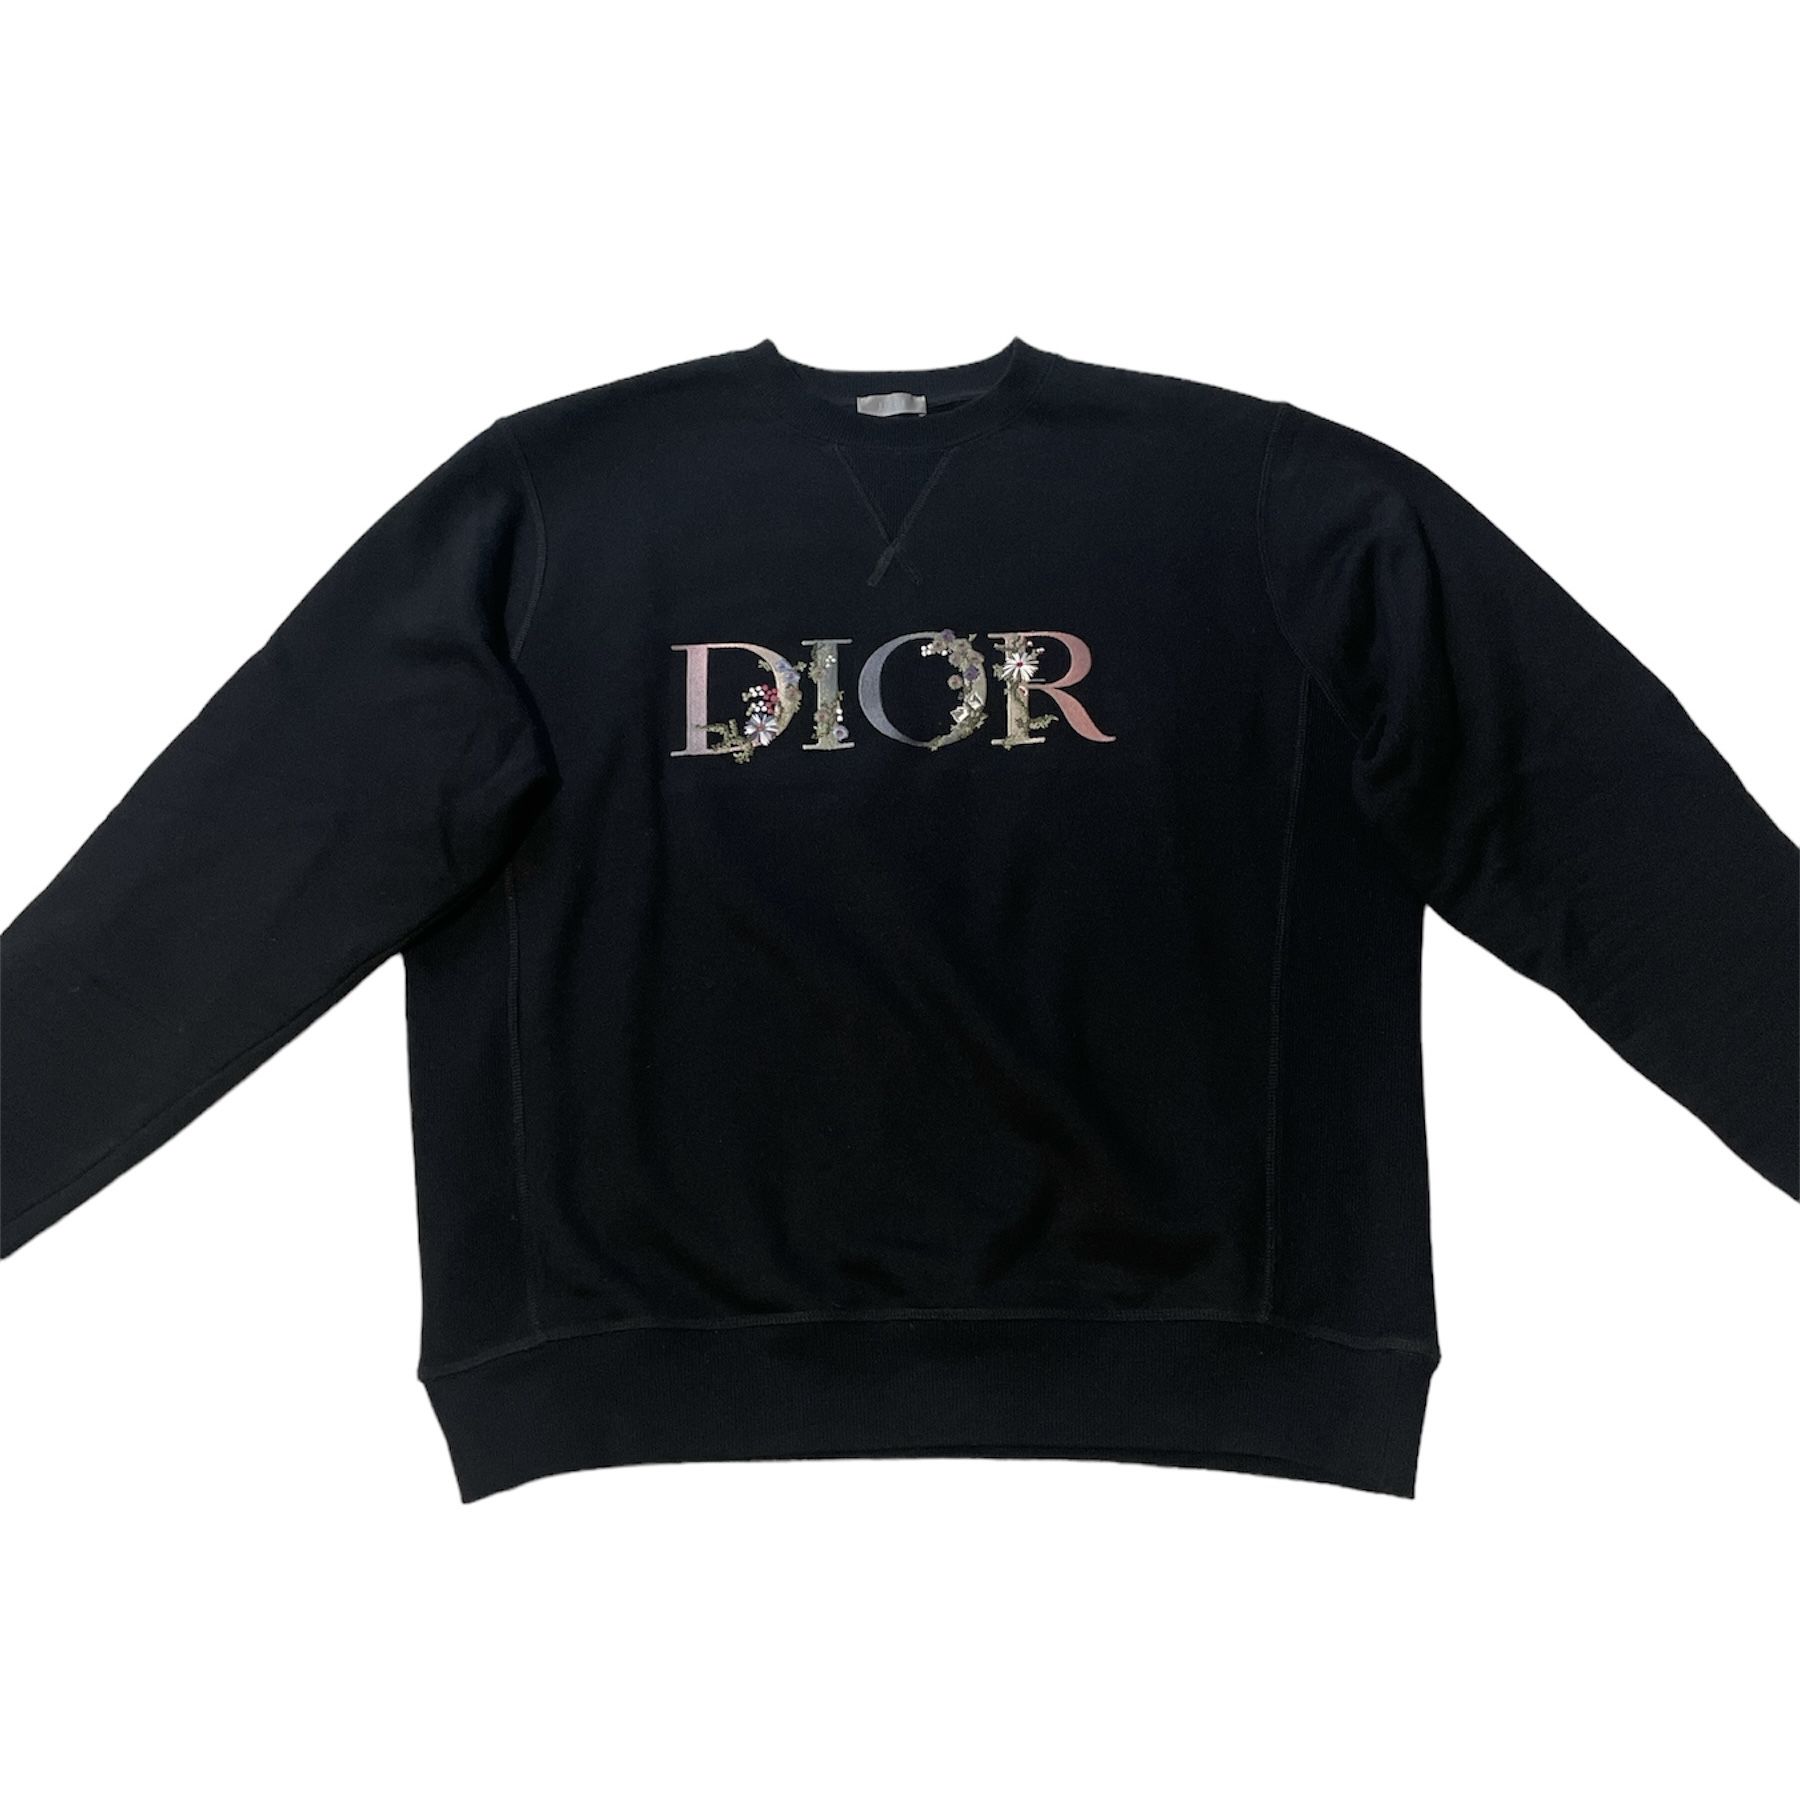 Dior sweatshirt 